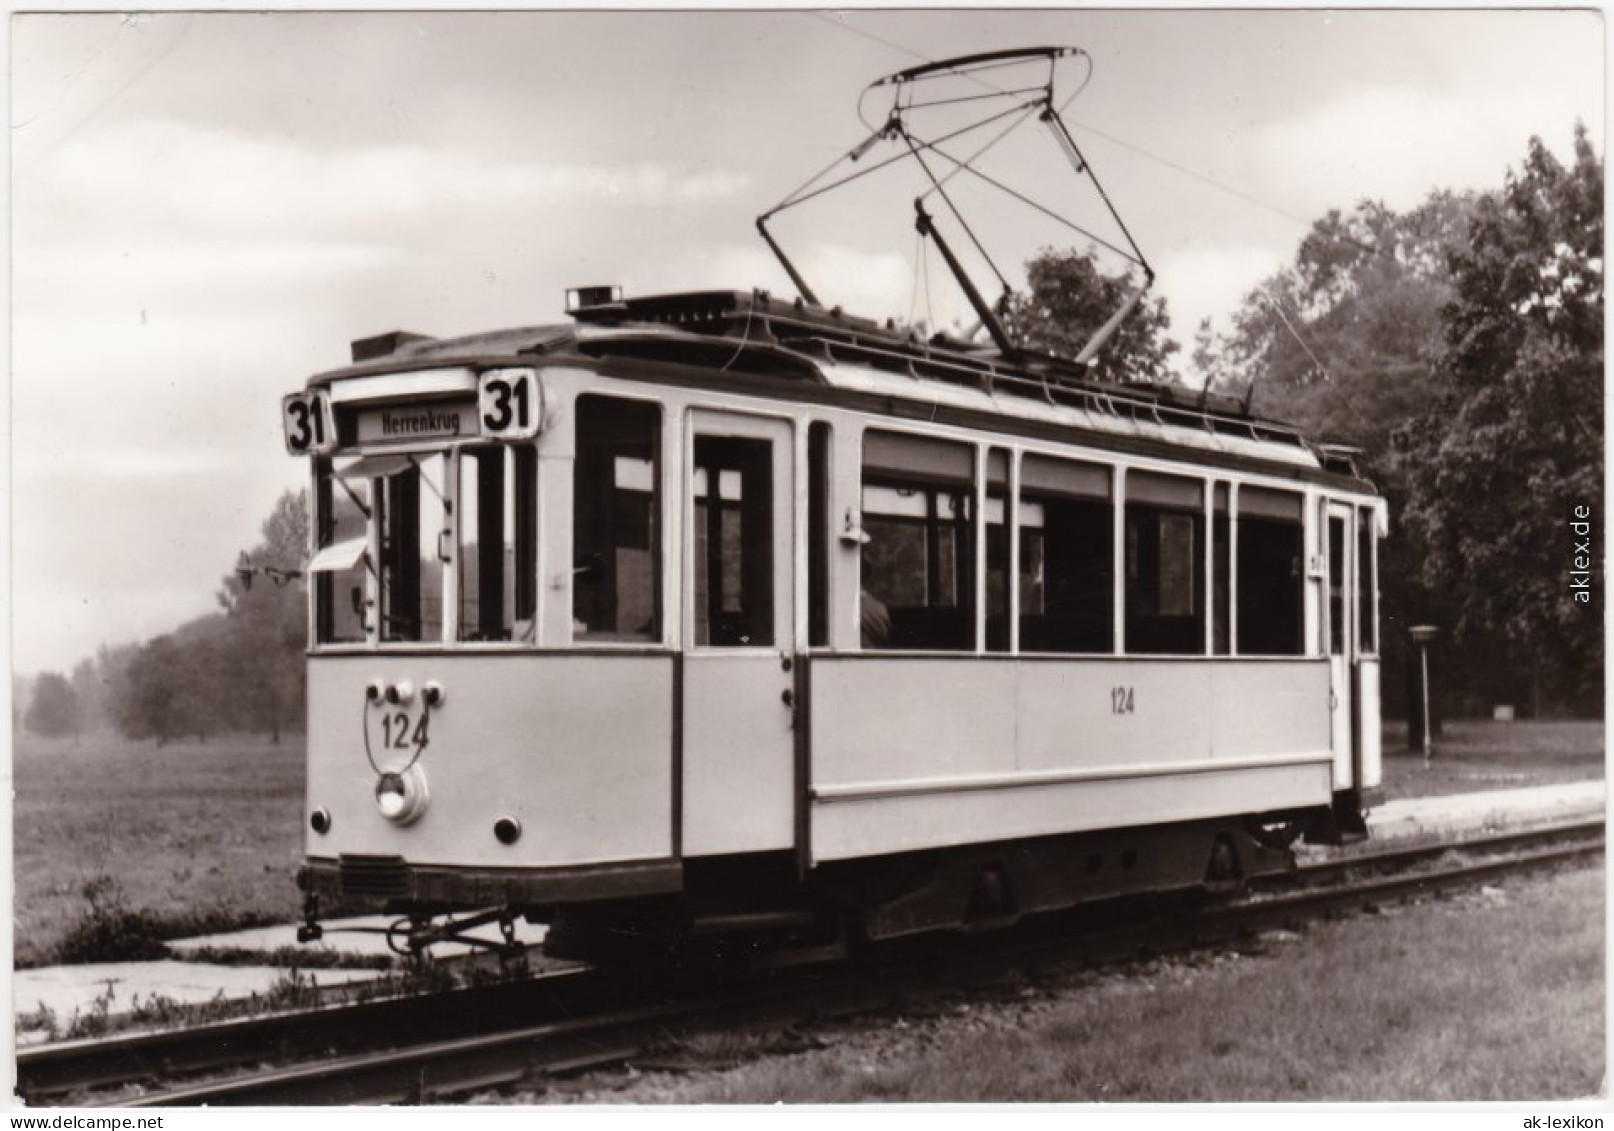 Triebwagen 124 Der Magdeburger Verkehrsbetriebe, 1928 Waggonfabrik Niesky Gebau - Tranvía